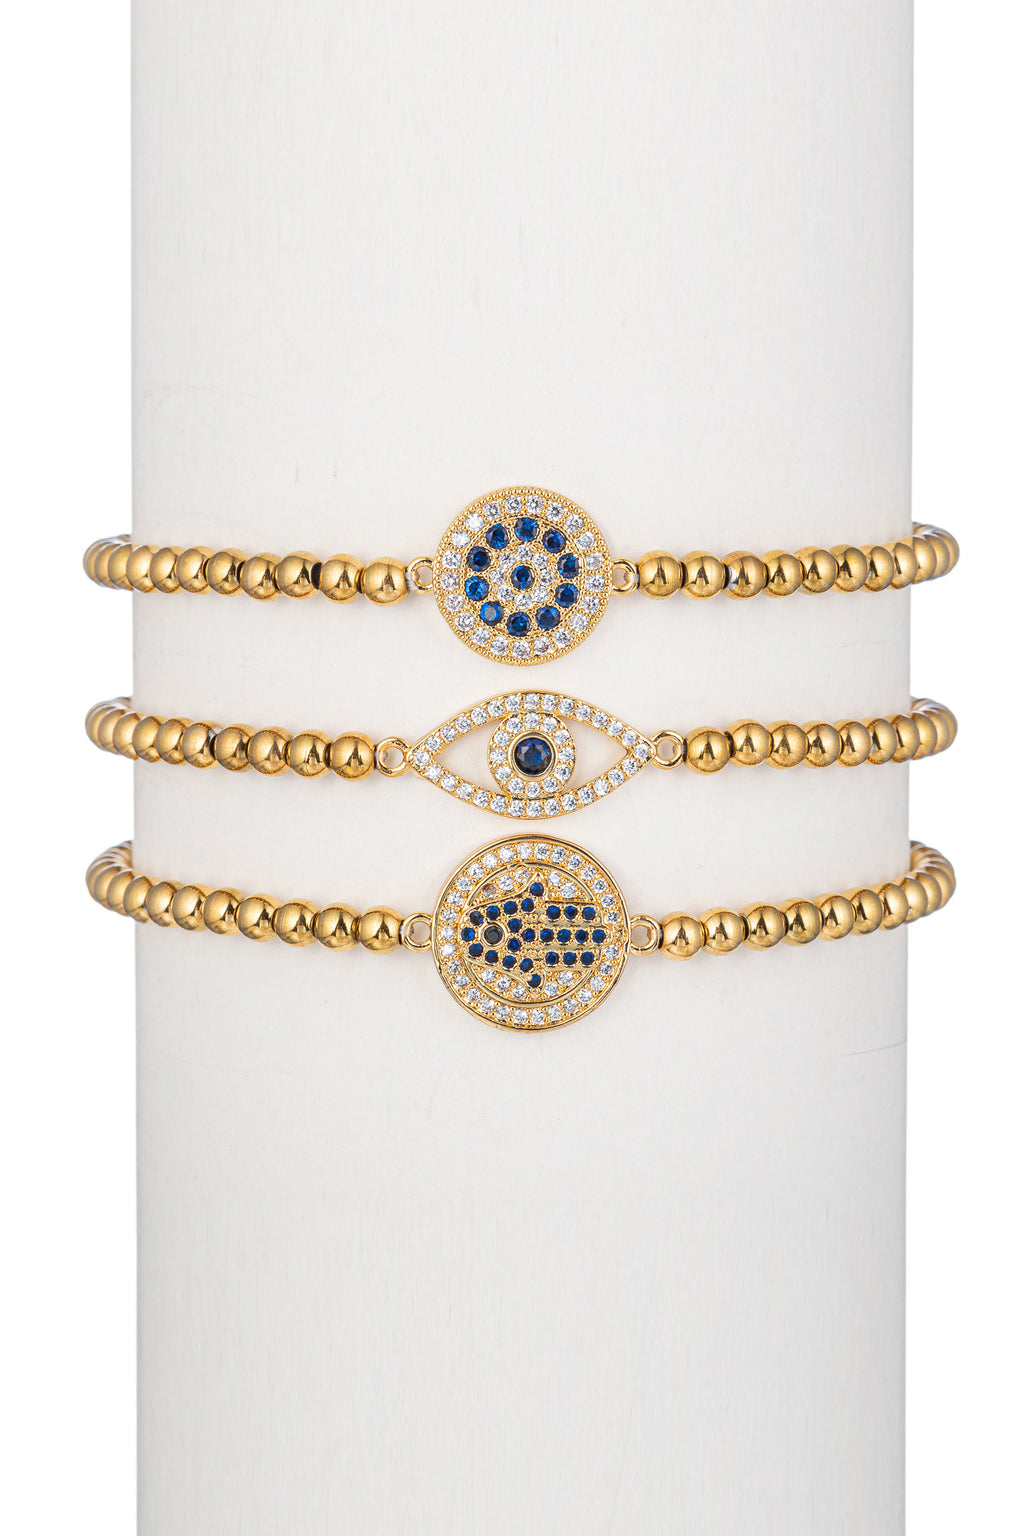 Gold titanium beaded bracelet set with CZ crystal studded brass pendants.